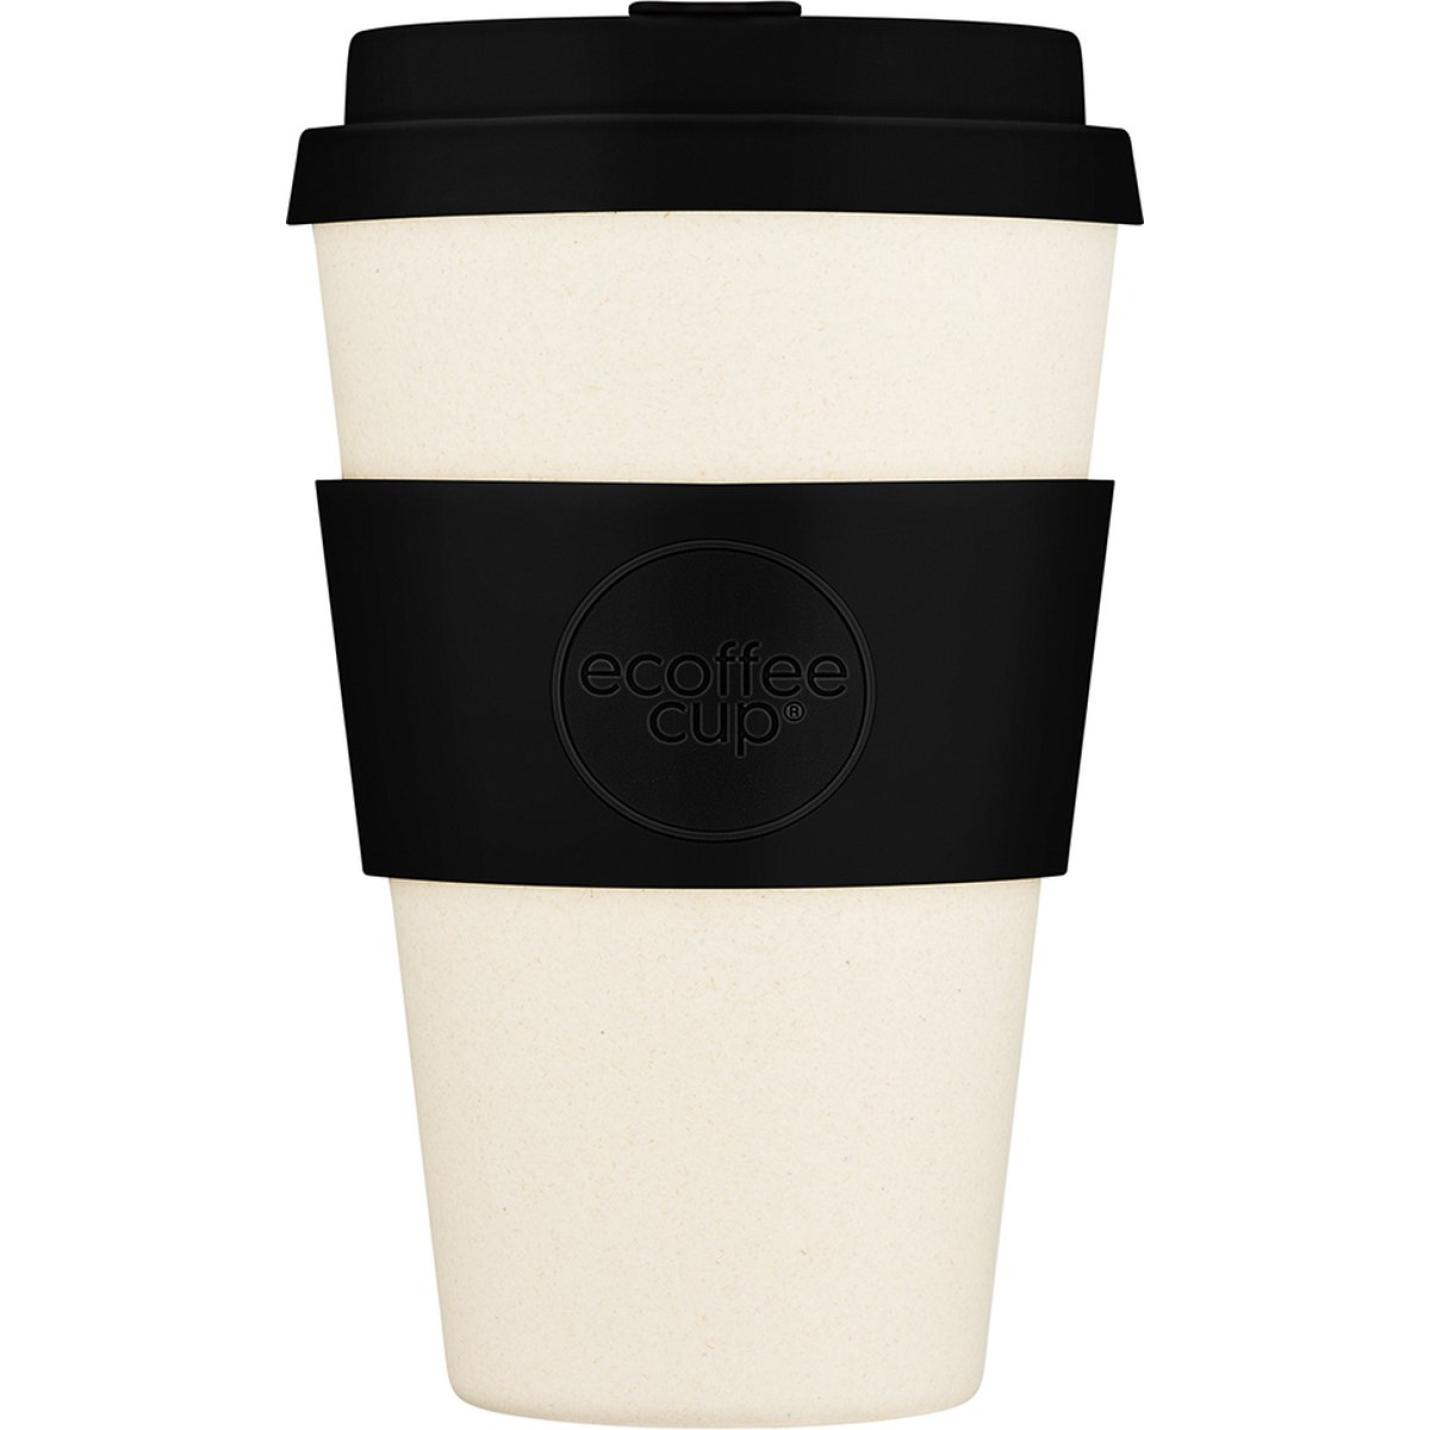 Ecoffee cup Black Nature 14oz 400ml